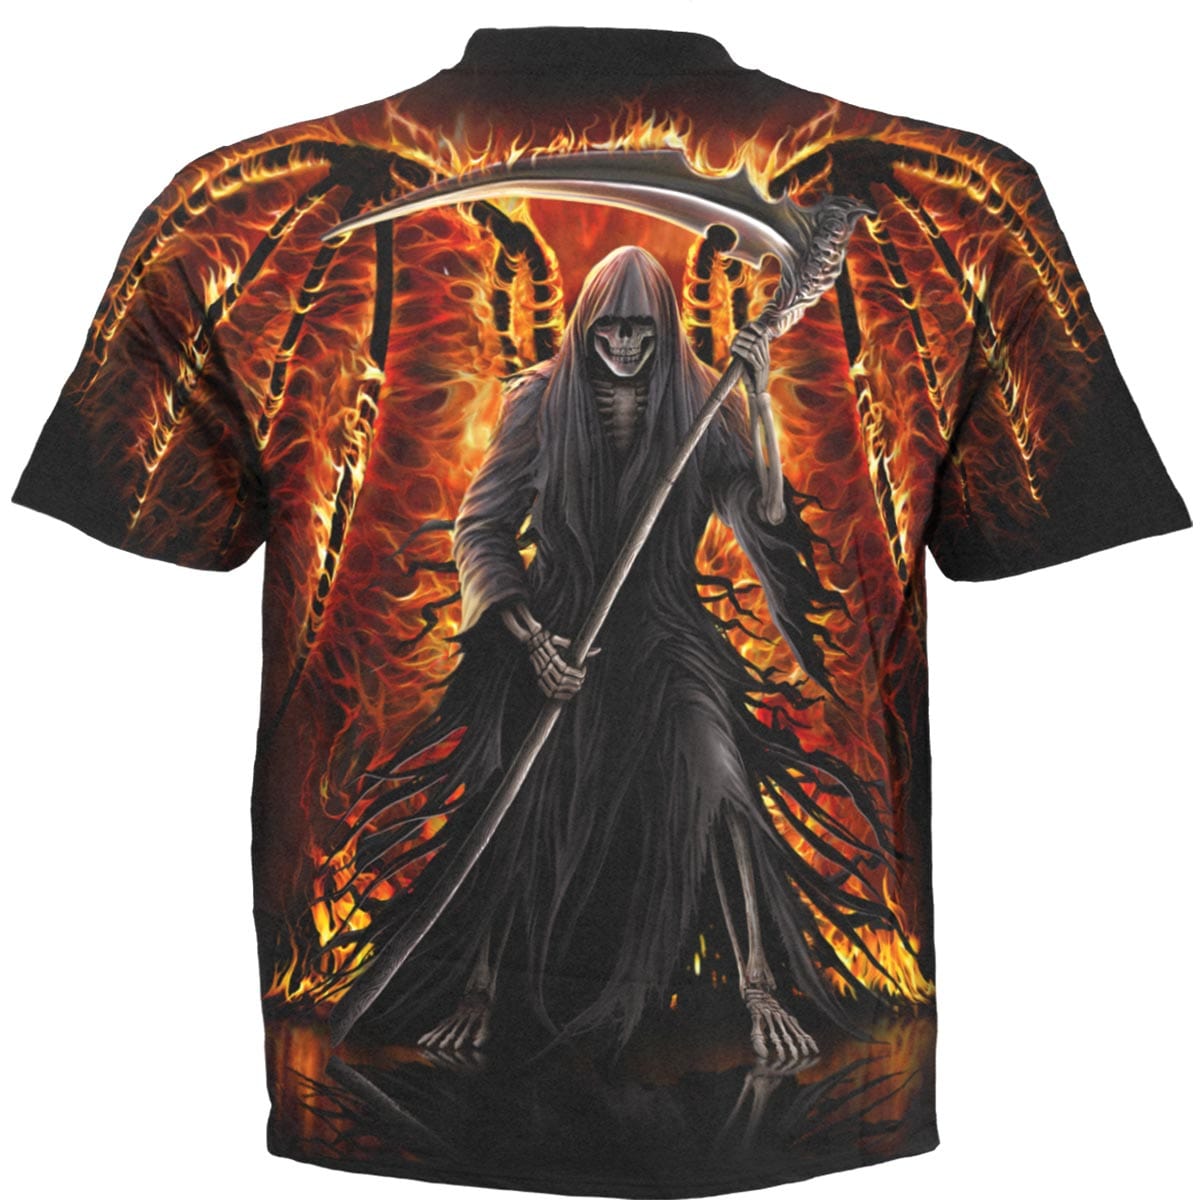 FLAMING DEATH - Allover T-Shirt Black - Spiral USA